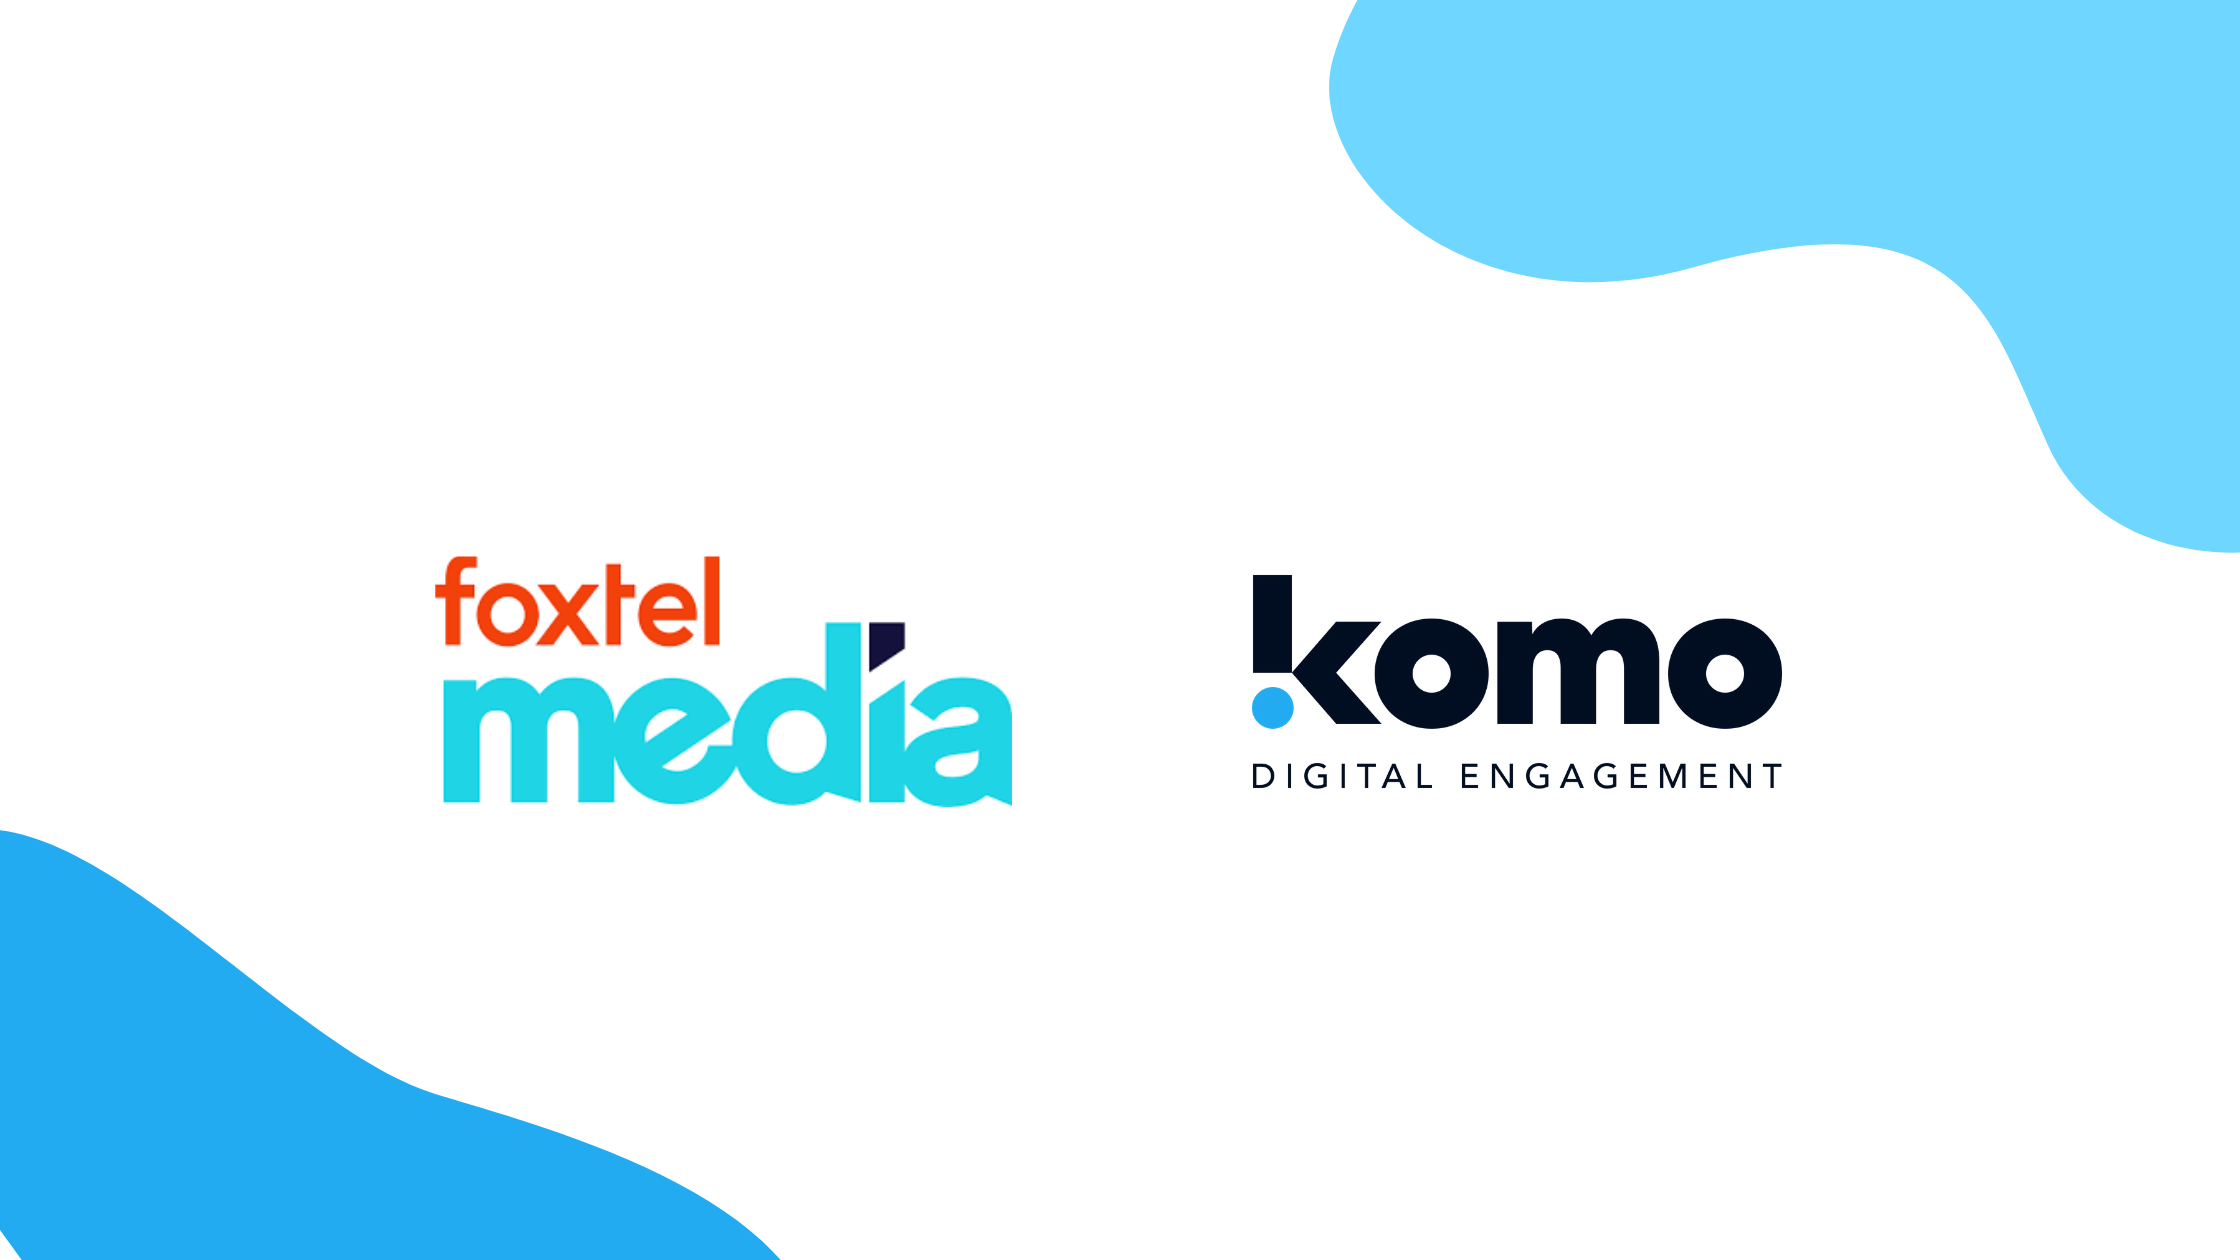 foxtel media komo partnership announcement 